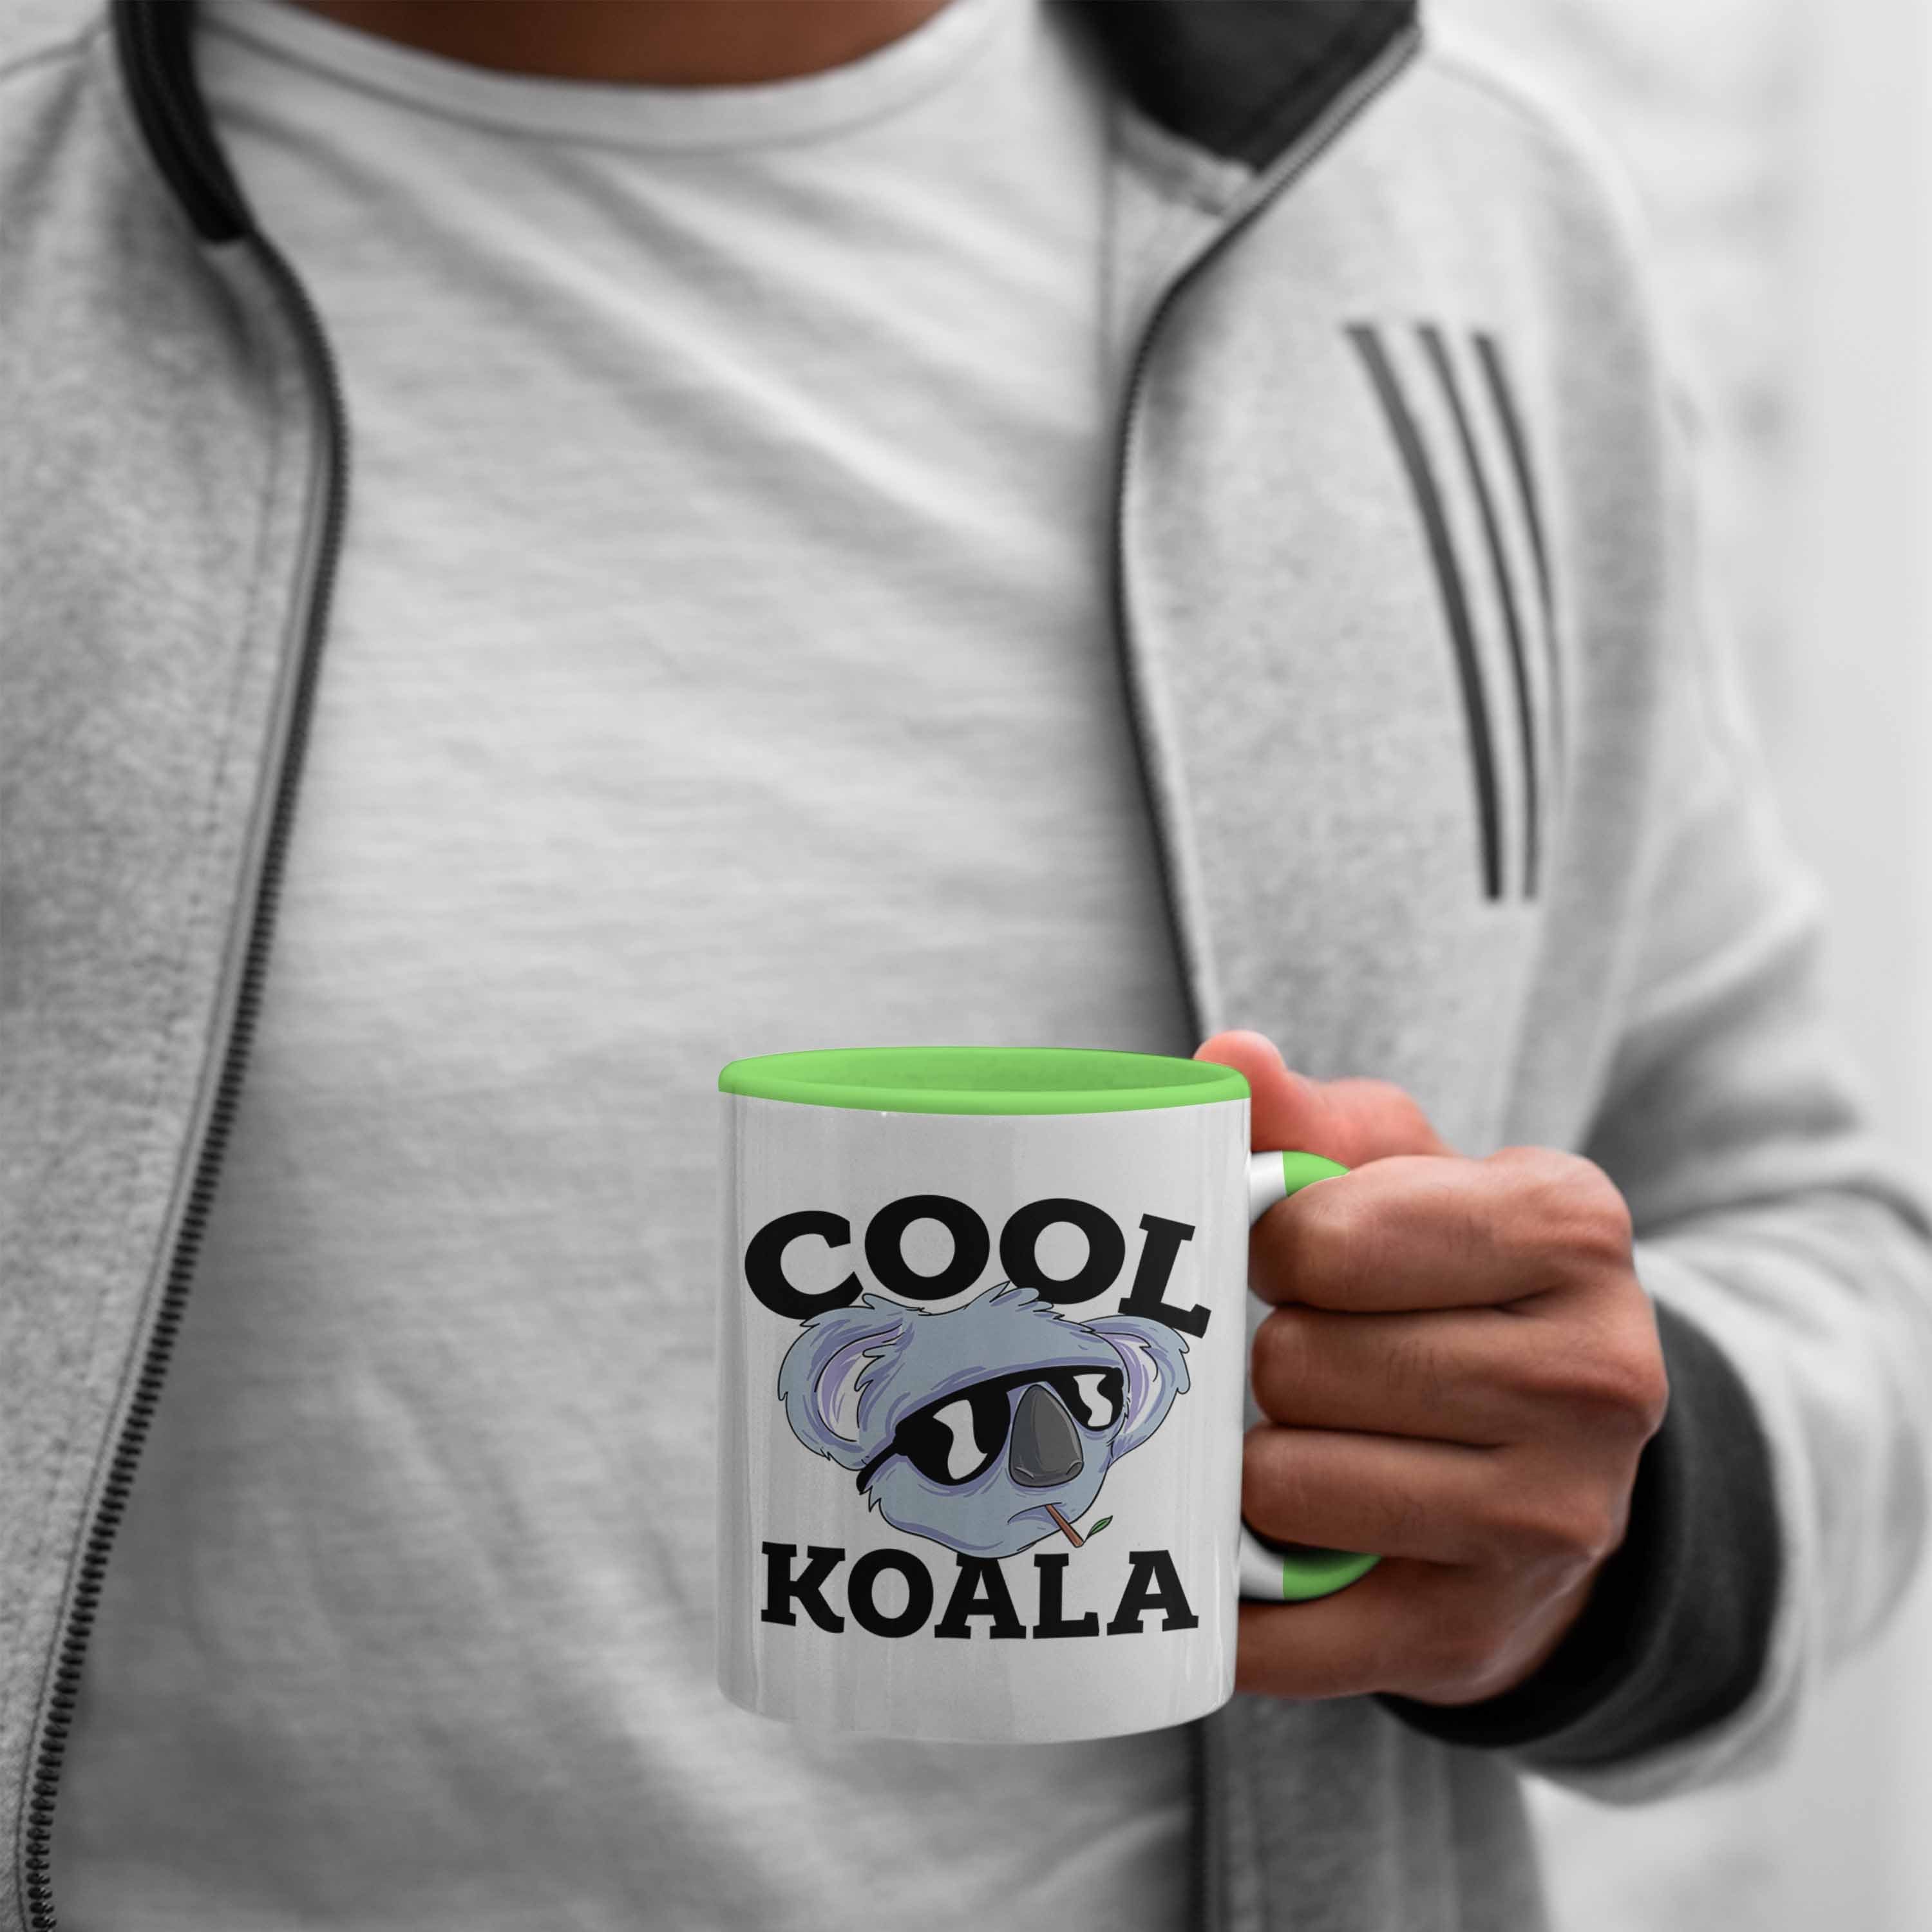 Grün Tasse für Geschenkidee Koala-Aufdruck Koala Tasse Tasse Trendation Koala-Liebhaber